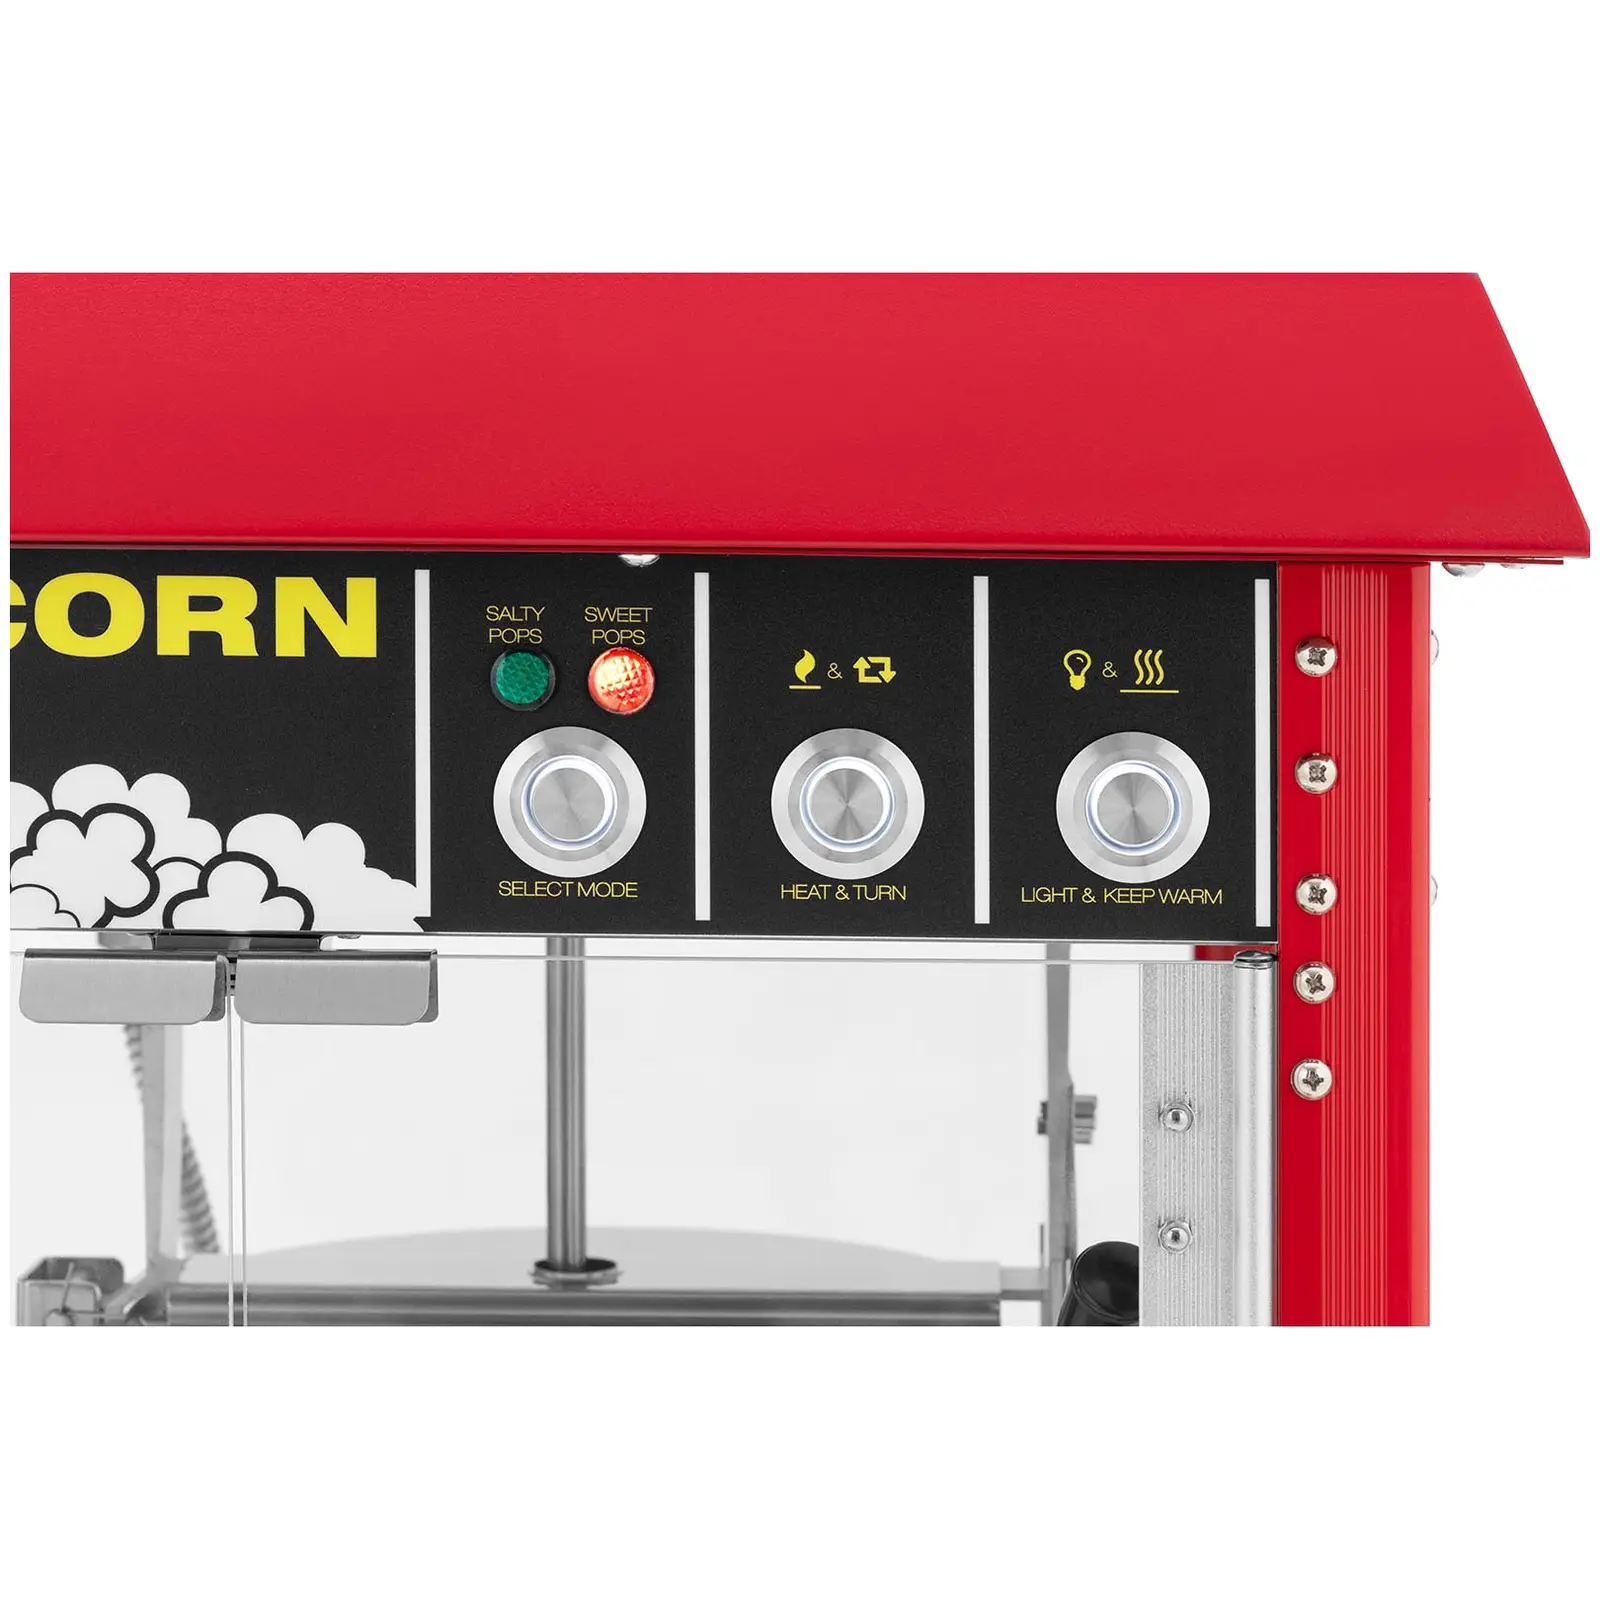 Popcorn Machine - Retro design - 150 / 180 °C - red - Royal Catering